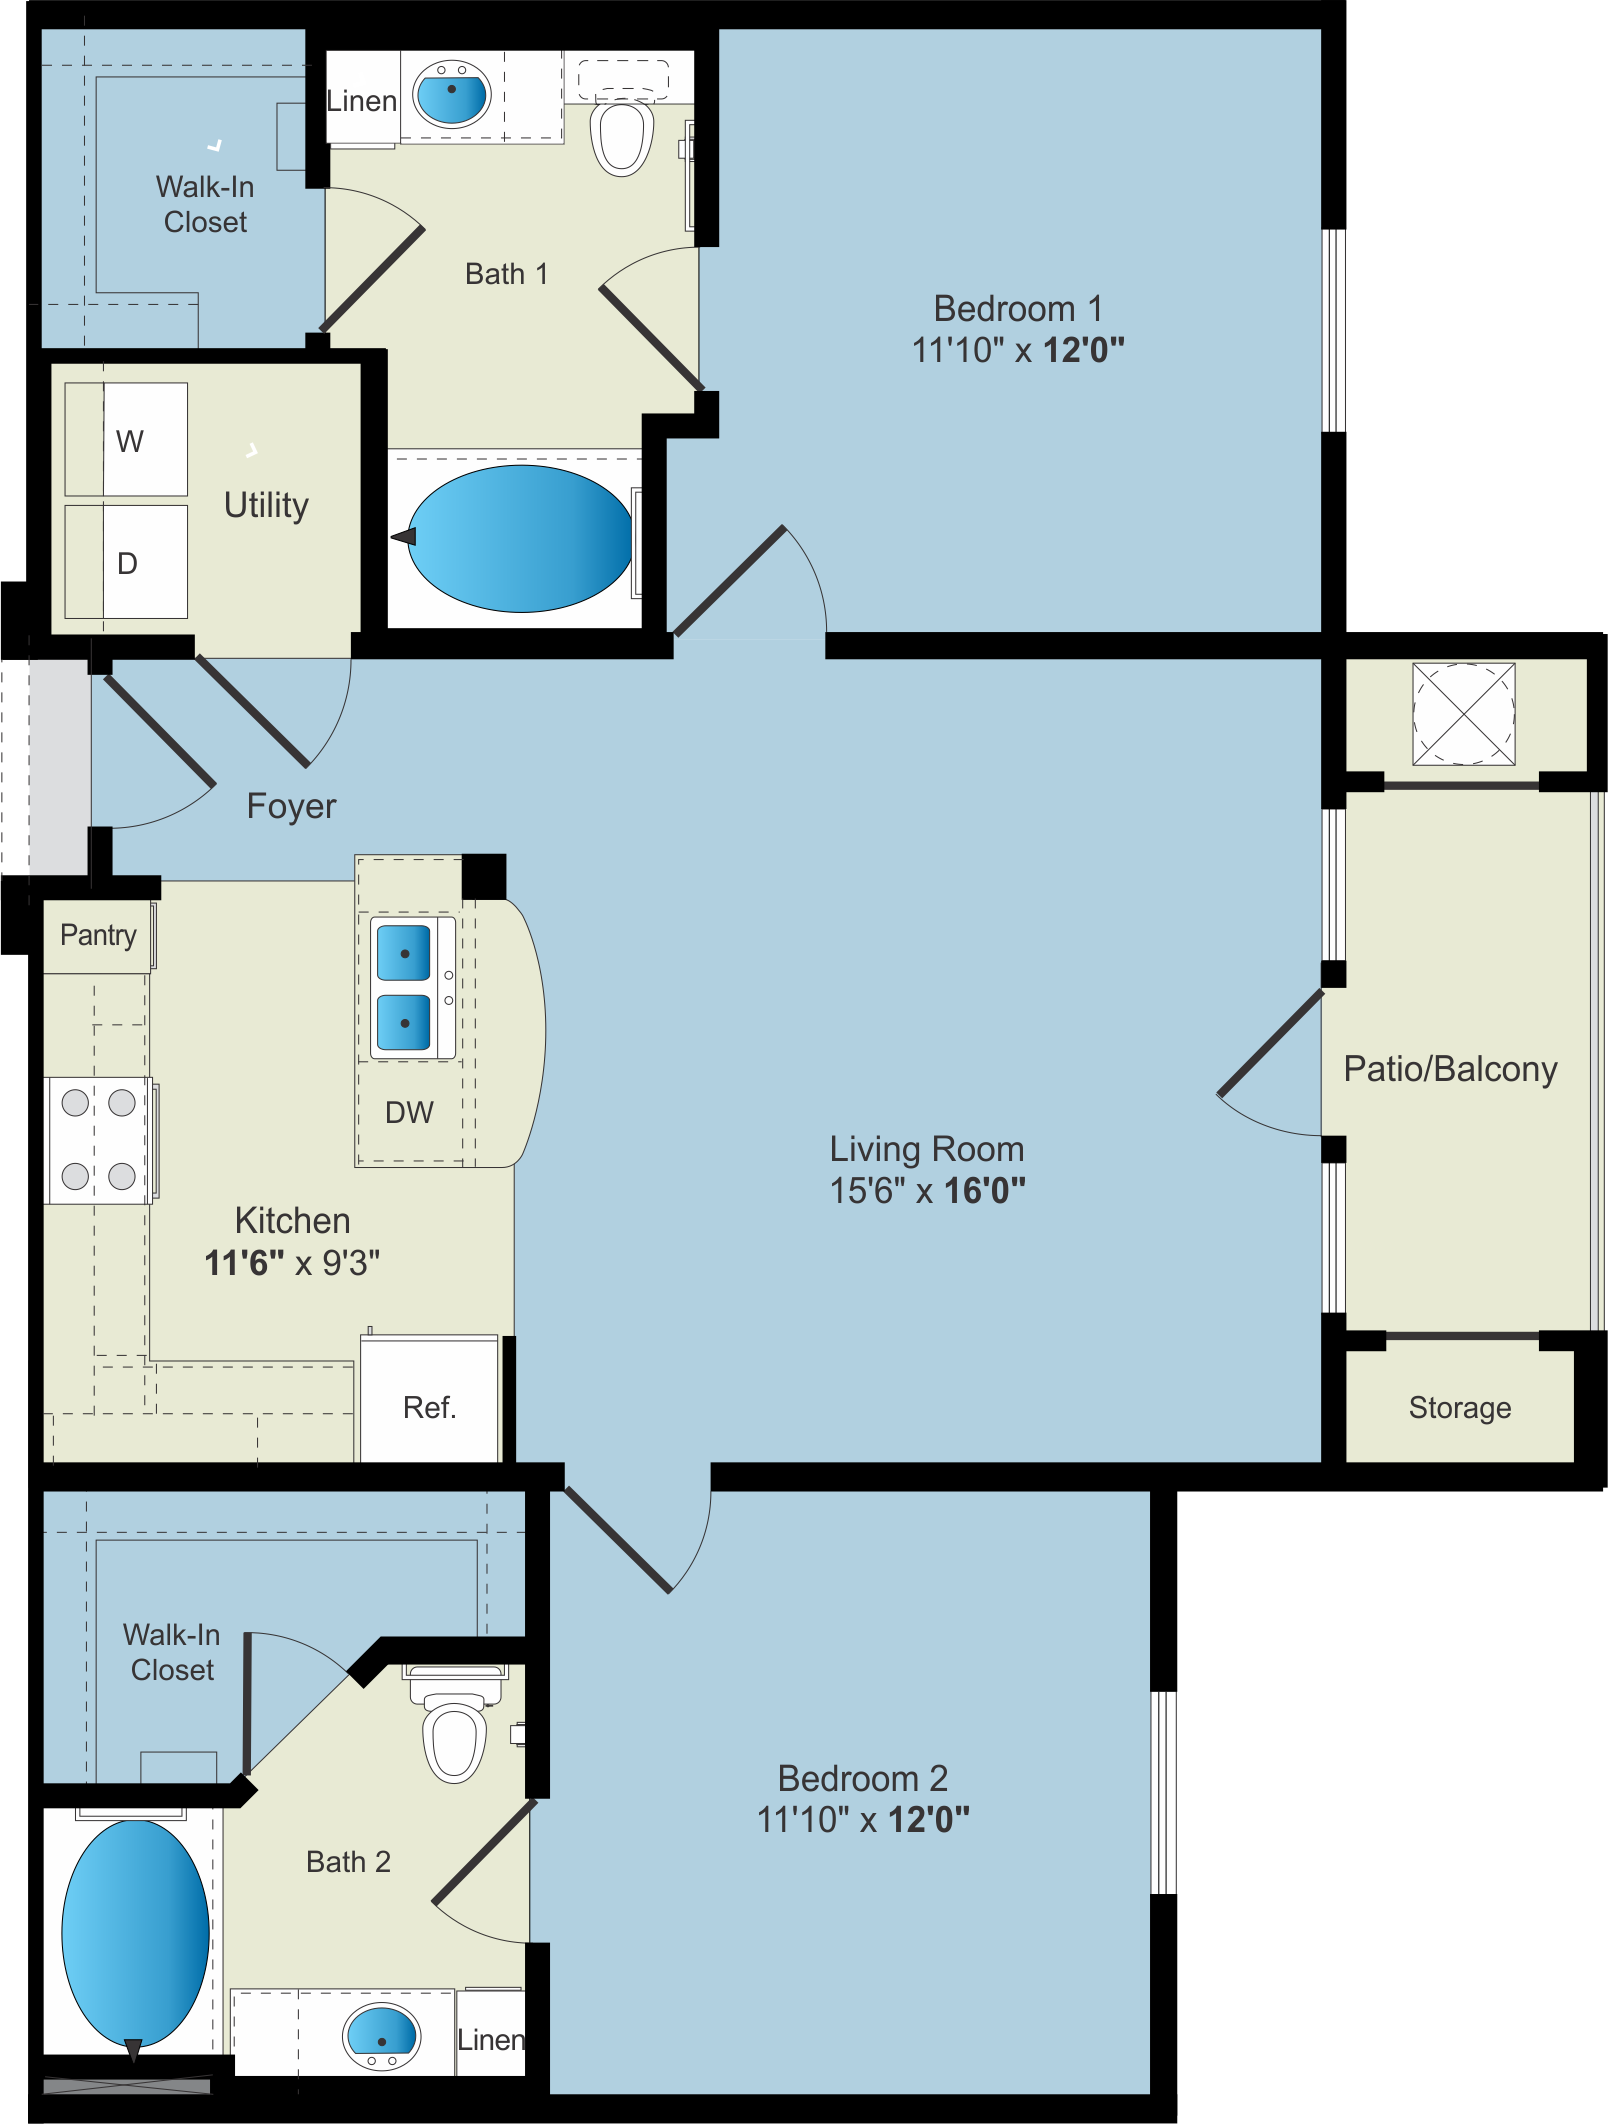 A blue floor plan of an apartment.